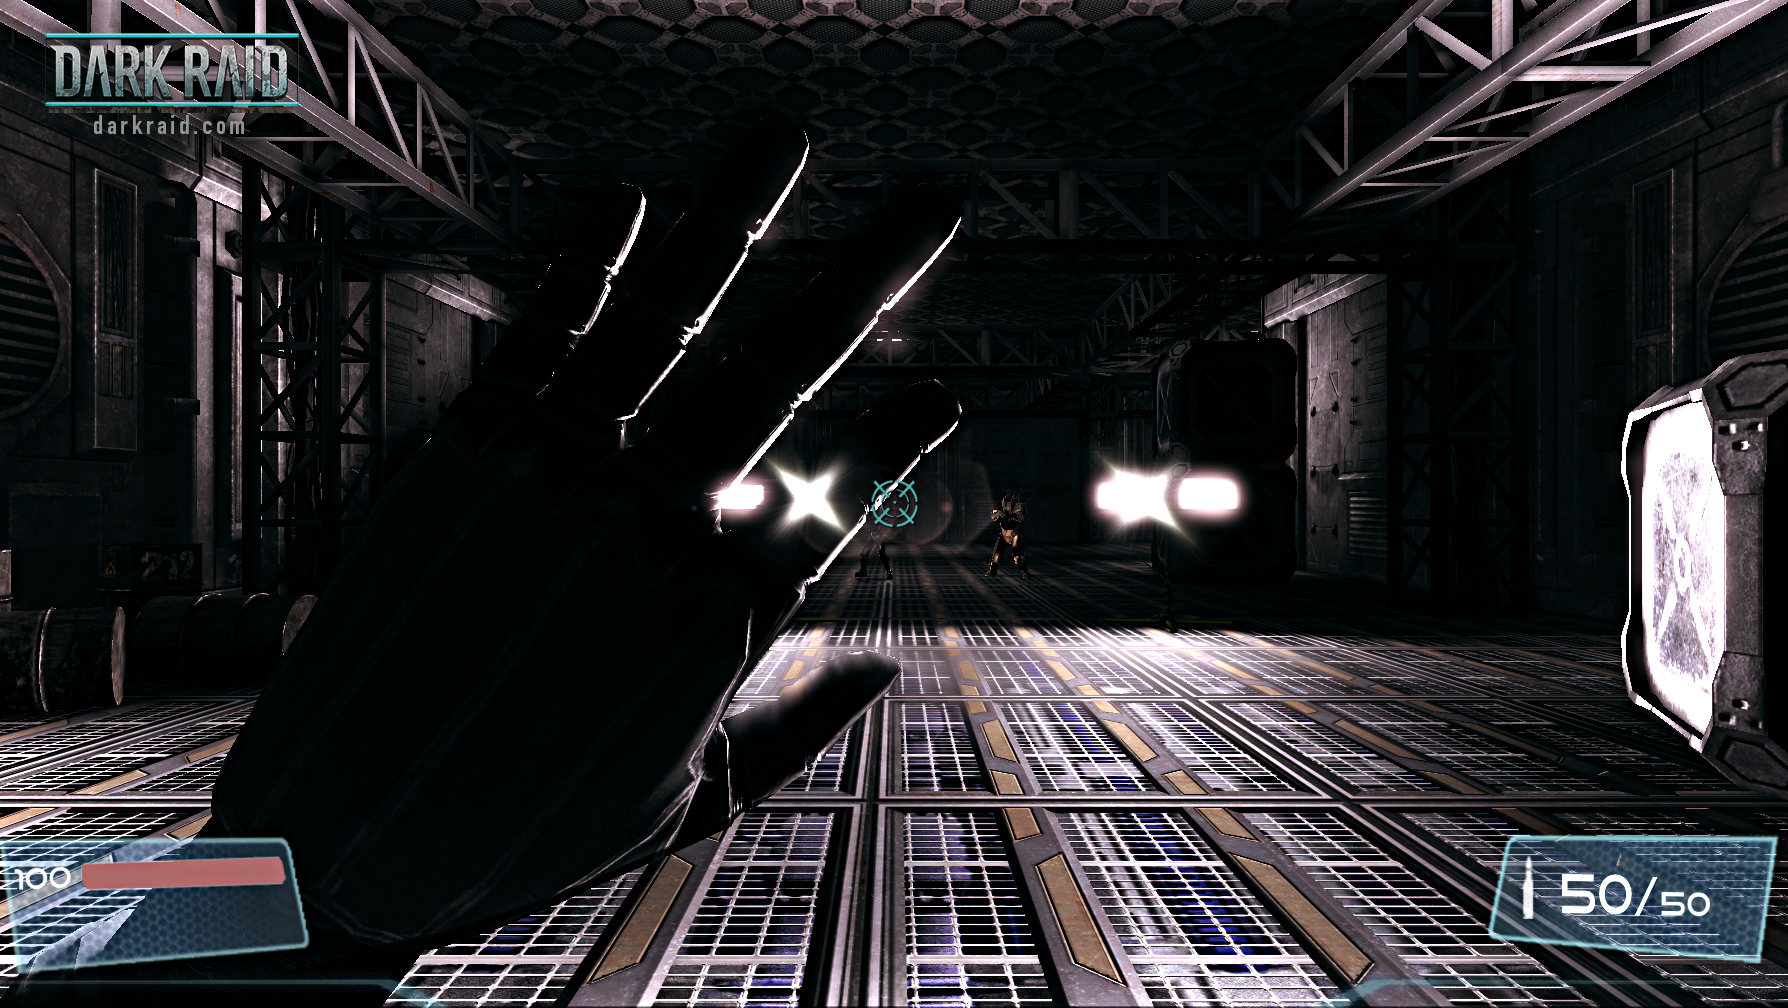 Dark Raid screenshot